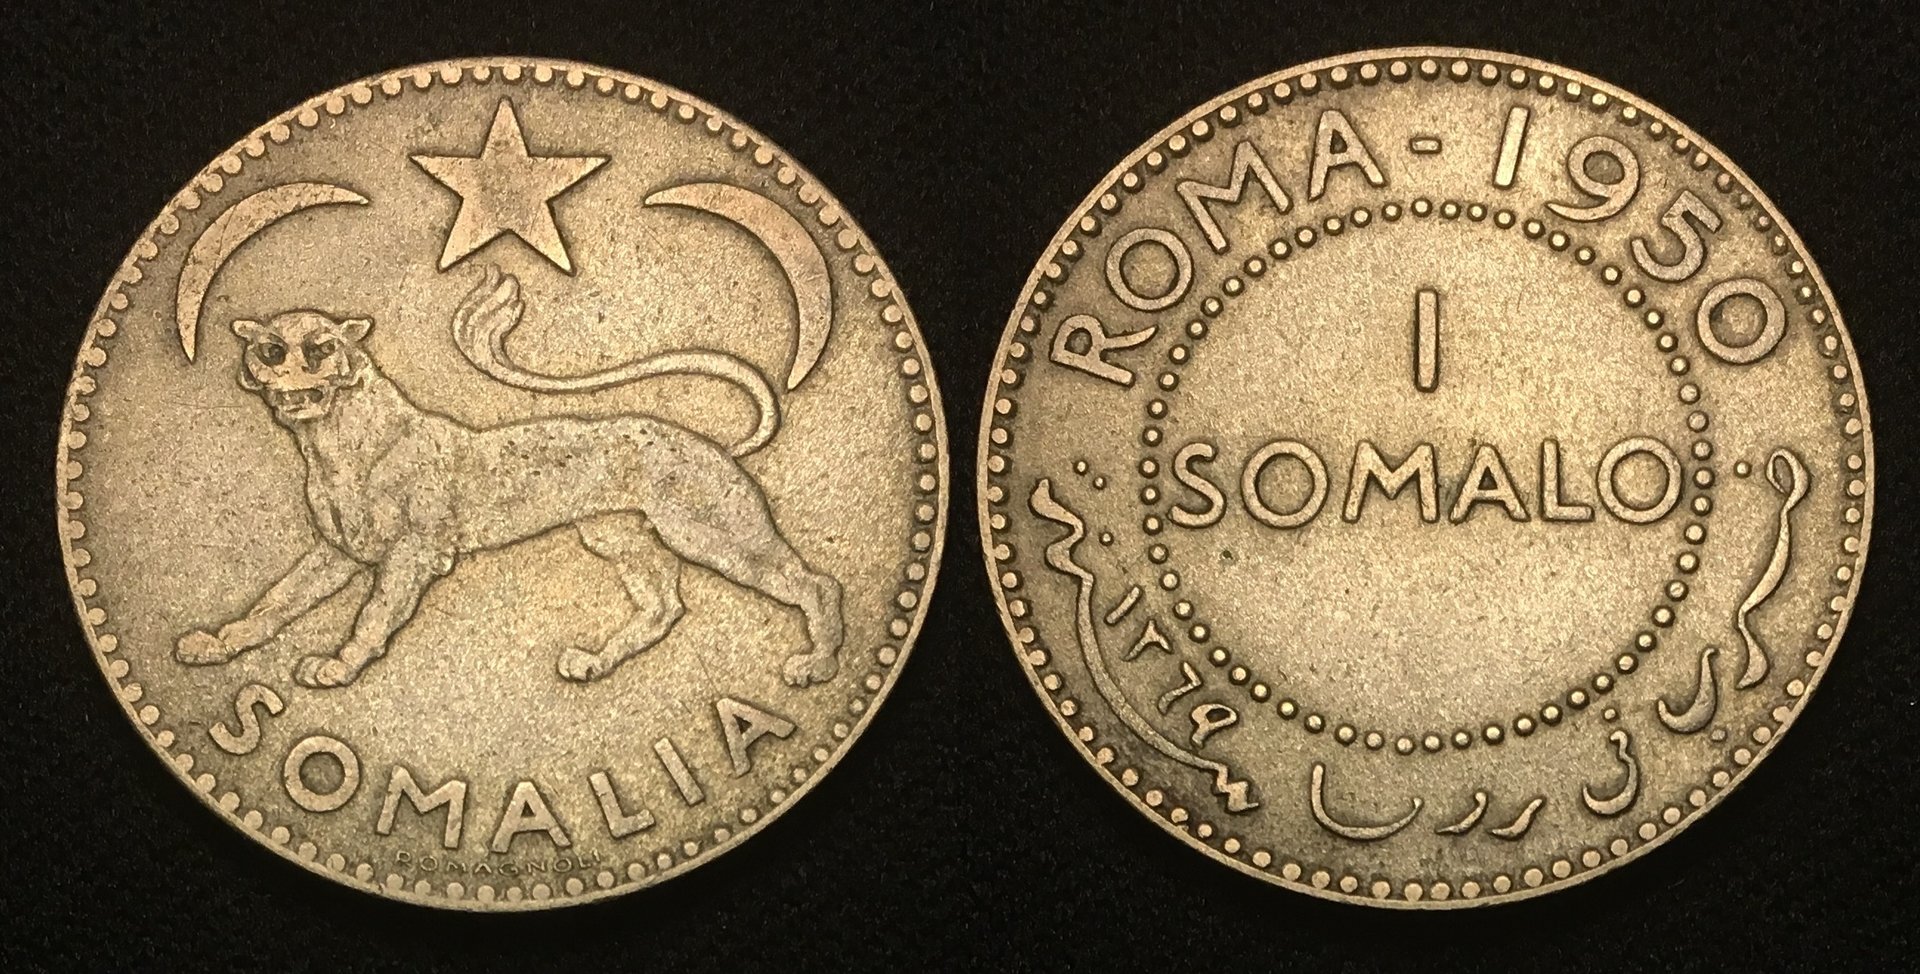 1950 1 Somalo Combined.jpg